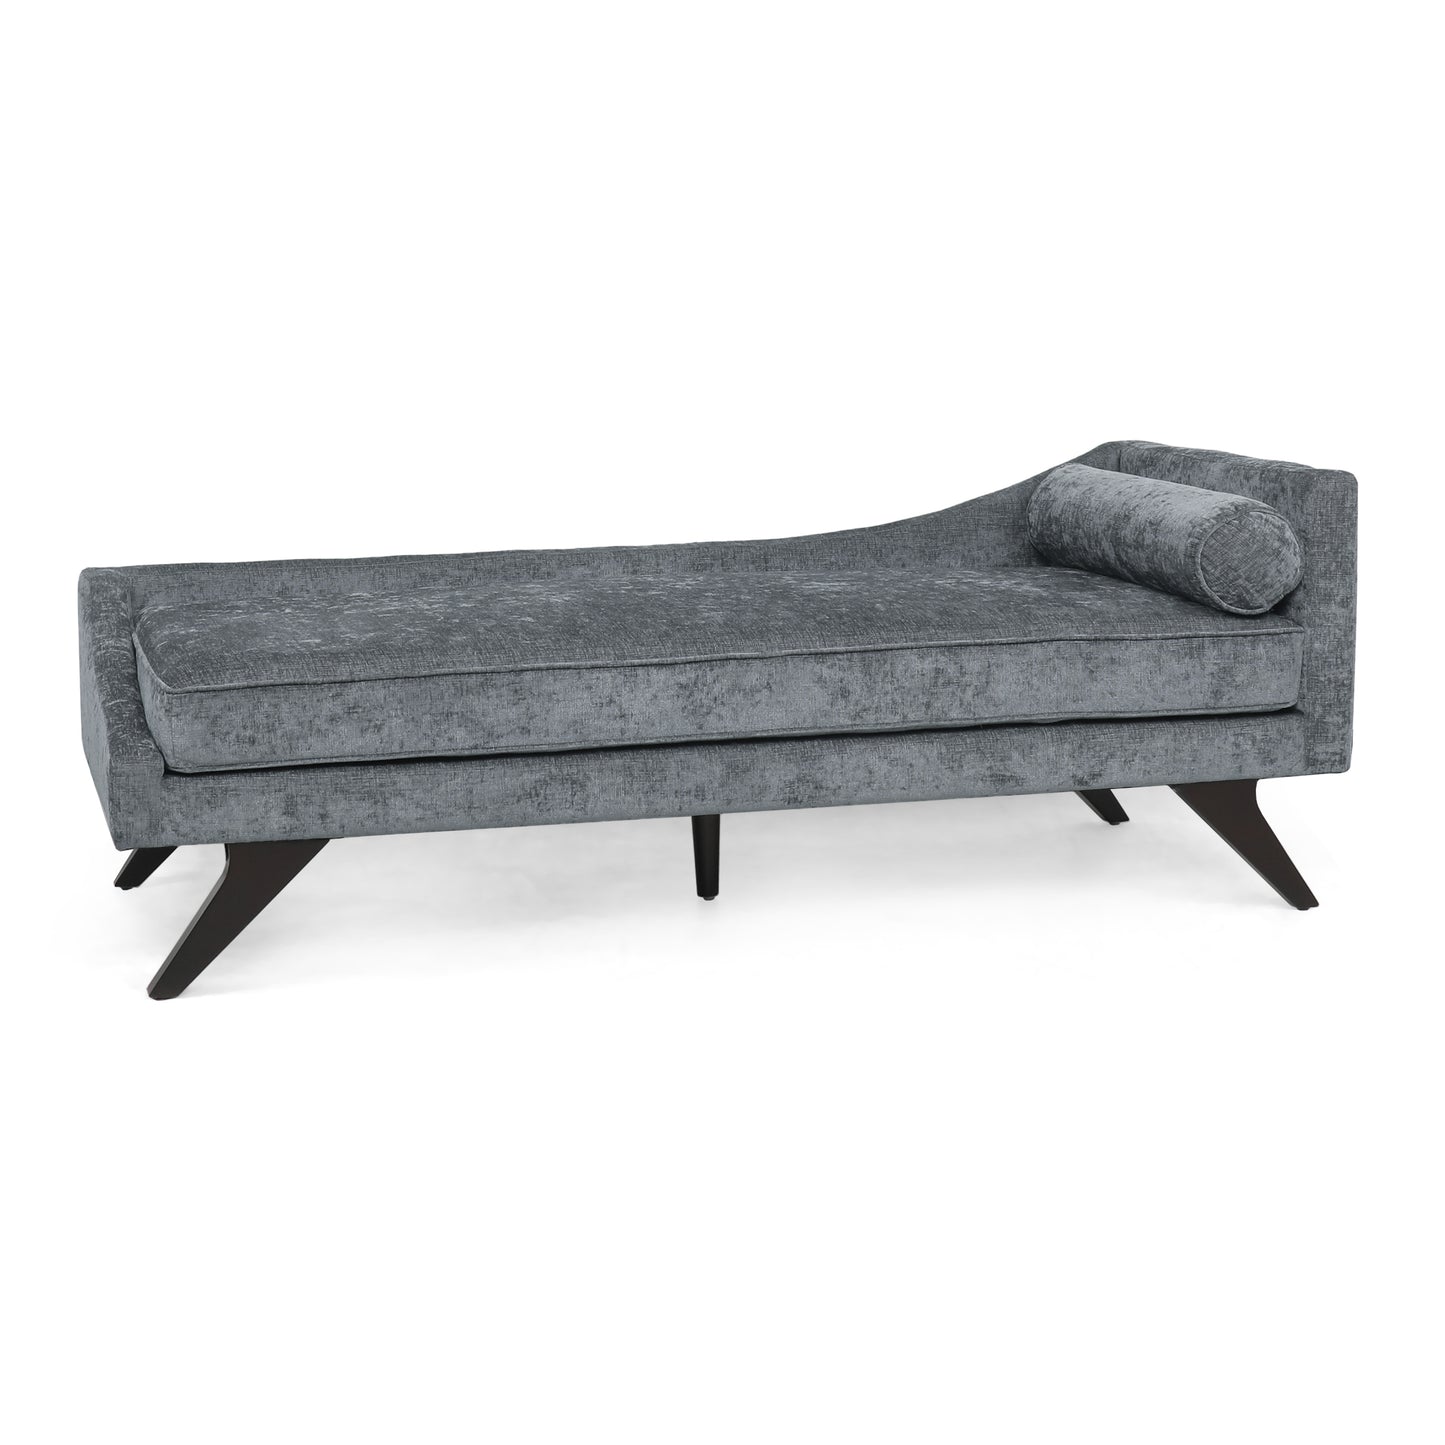 Alphonso Mid-Century Modern Fabric Chaise Lounge